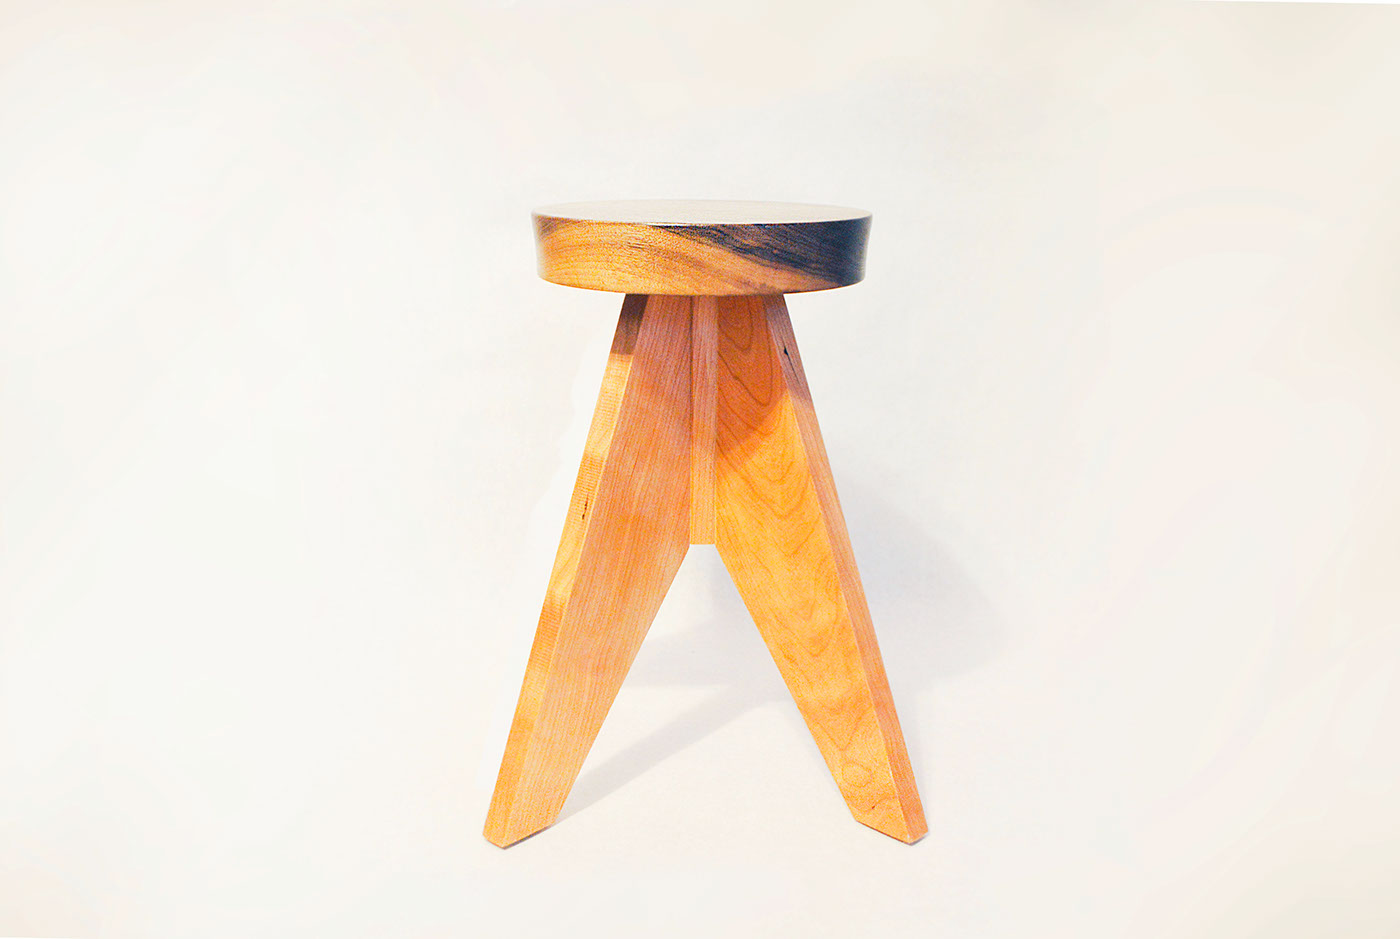 wood furniture craft Joint art risd industrial design  design woodwork chair